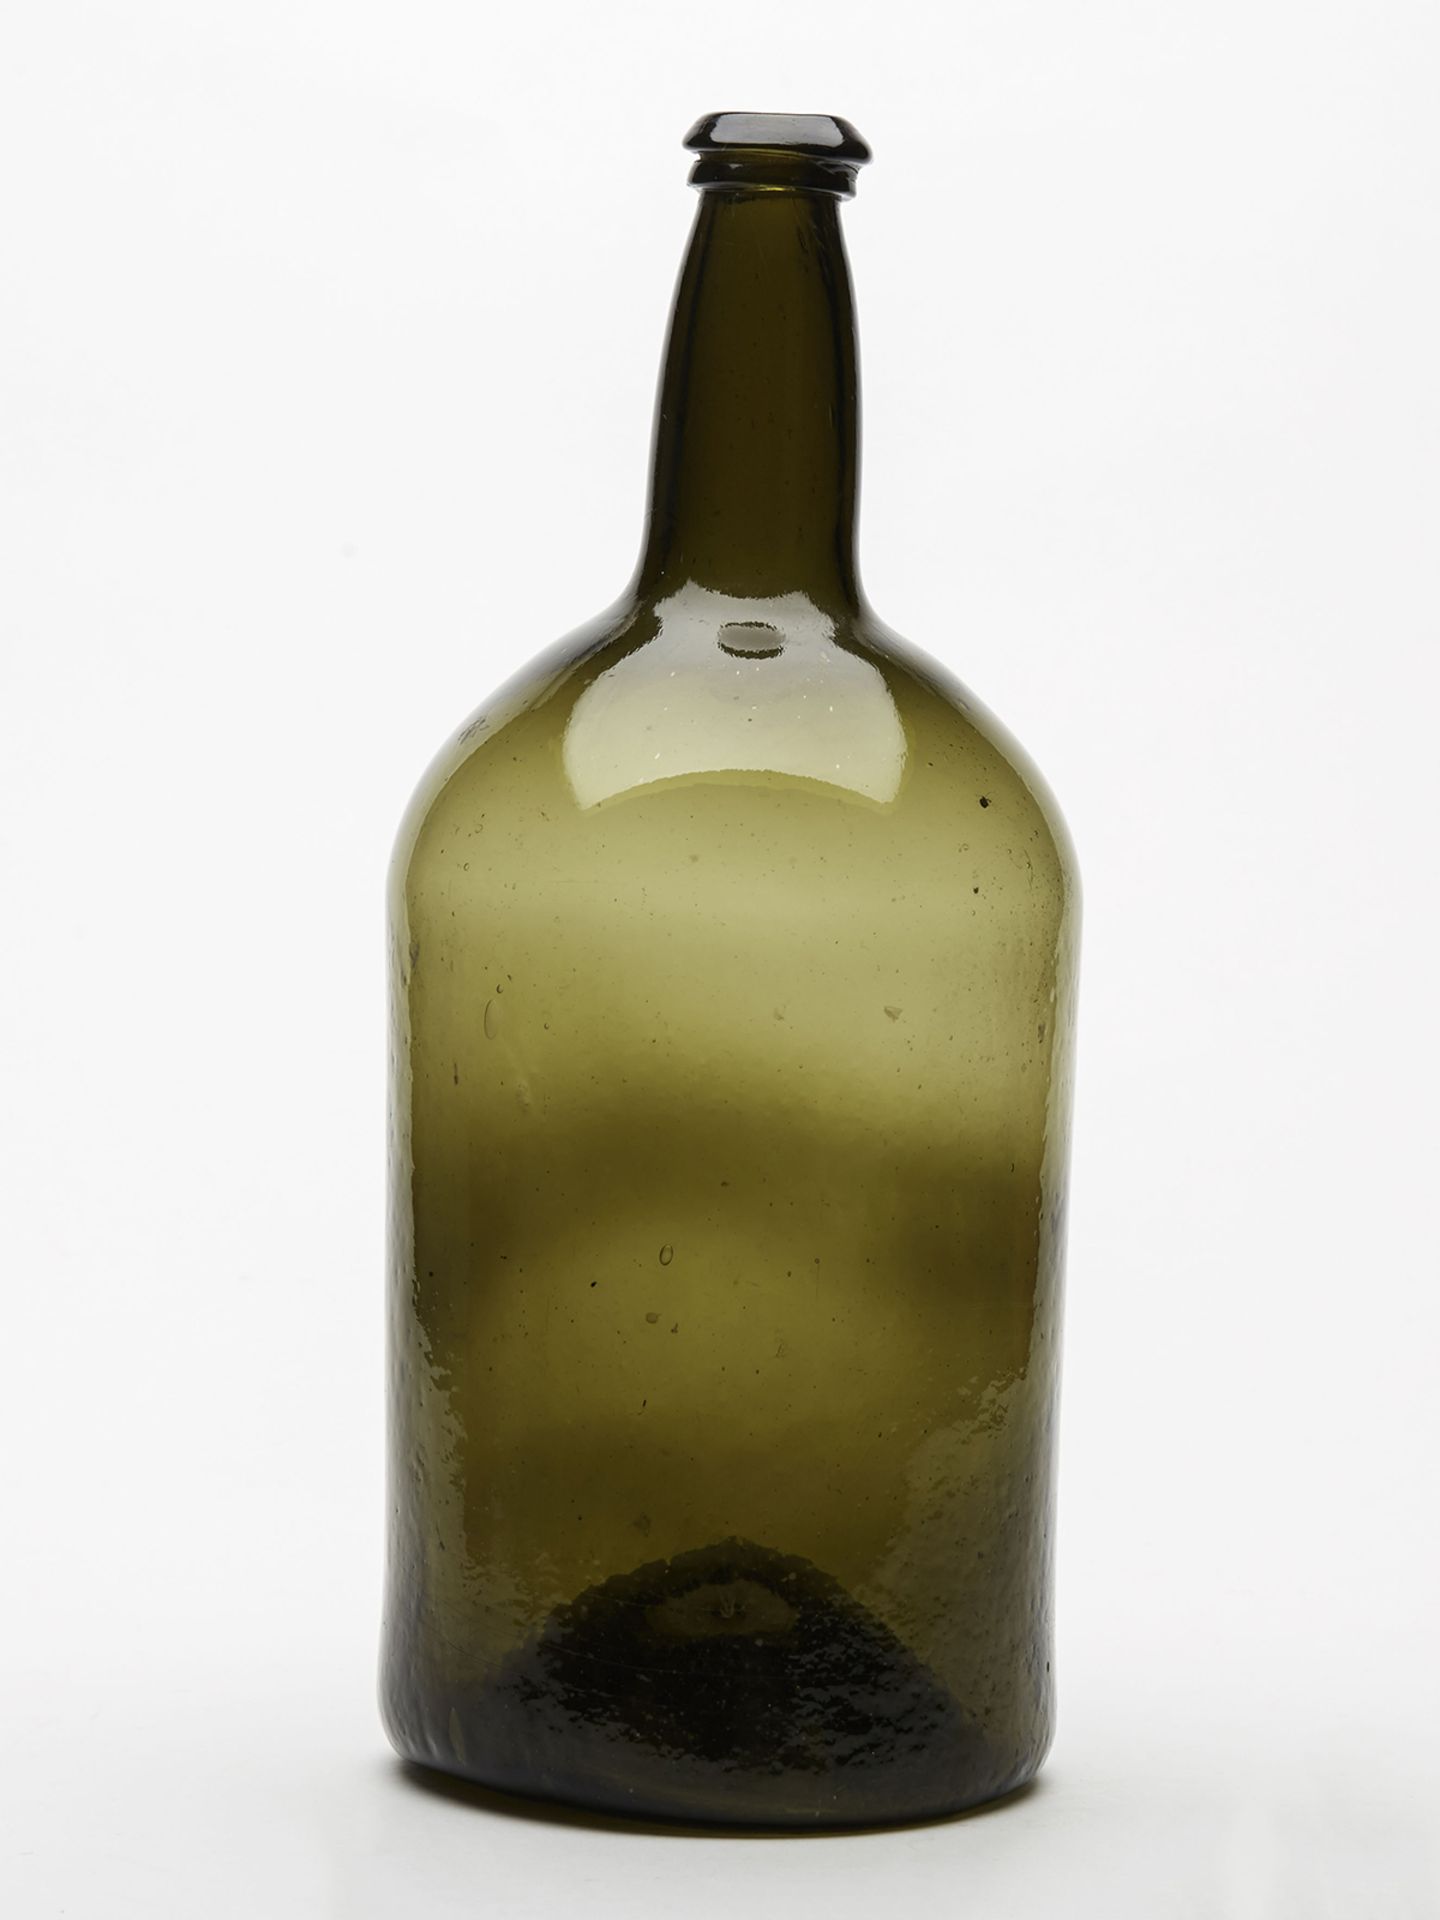 FINE LARGE ANTIQUE GREEN GLASS WINE BOTTLE c.1800